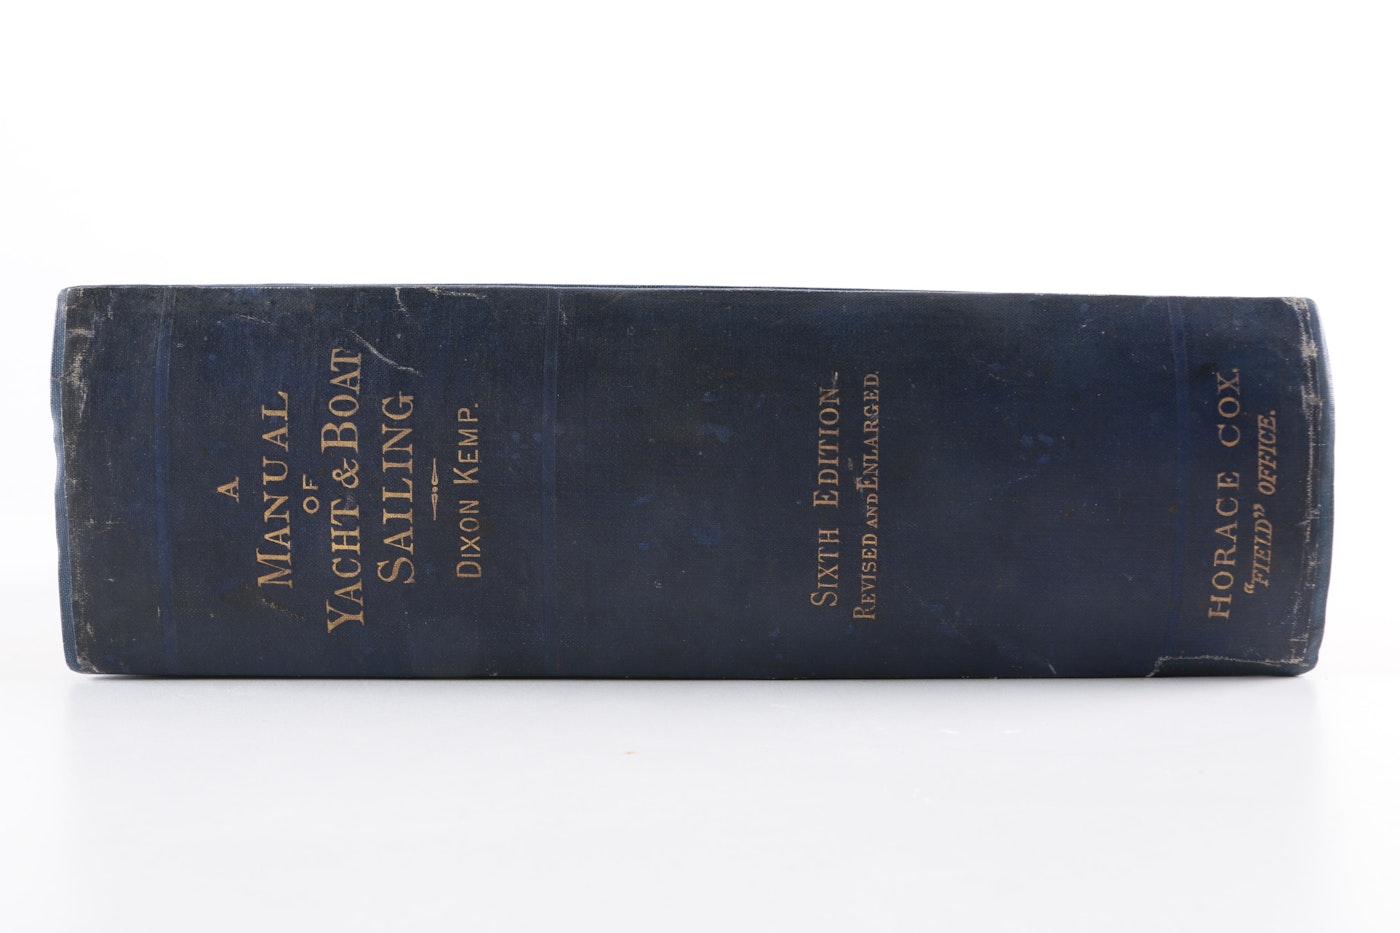 1888 "A Manual of Yacht &amp; Boat Sailing" by Dixon Kemp EBTH